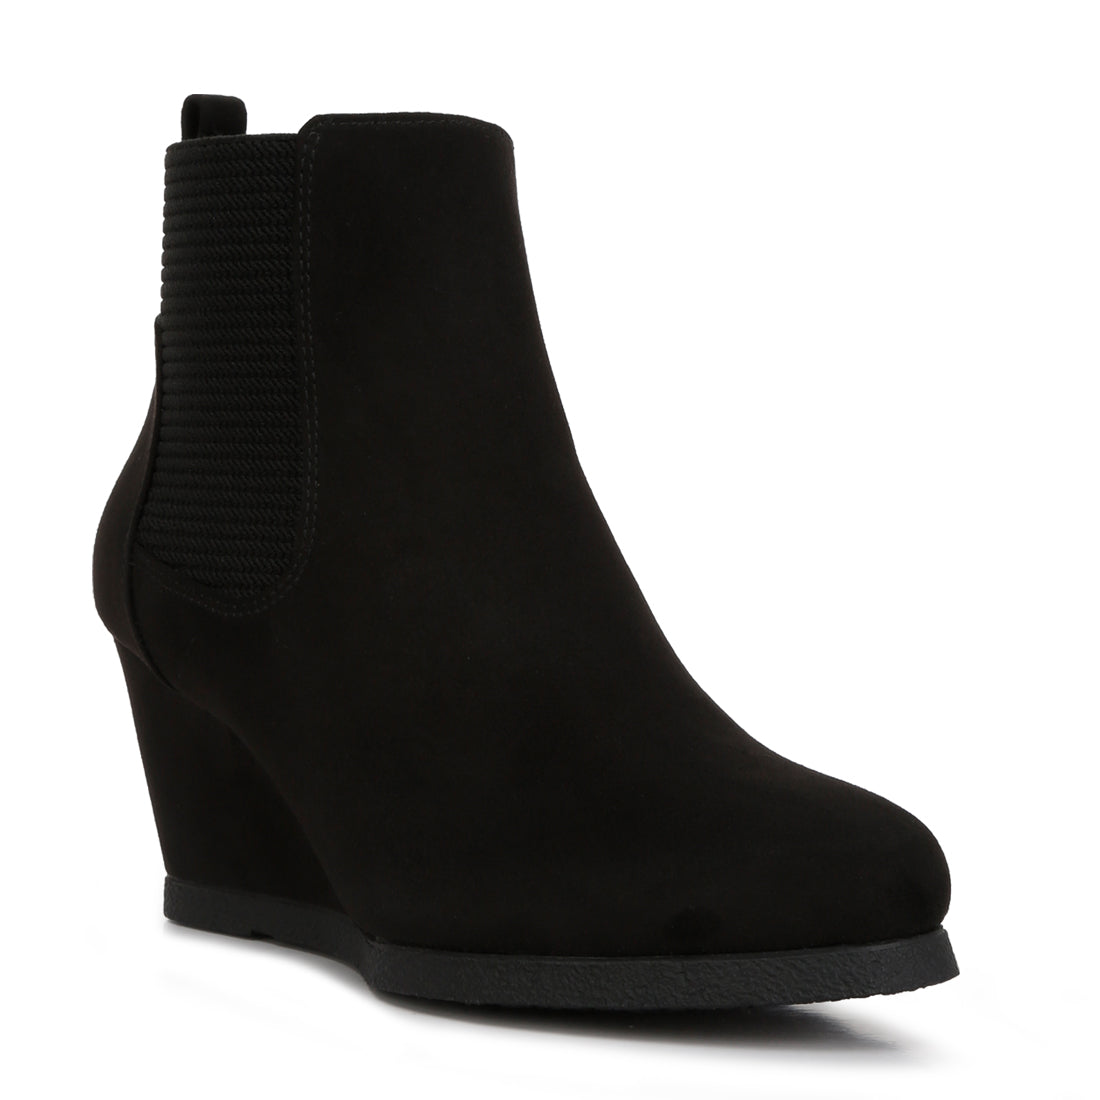 Jessica Simpson Abille Ankle Boots Black Faux Suede Pointy Toe Heel Zip Sz  7.5M | eBay